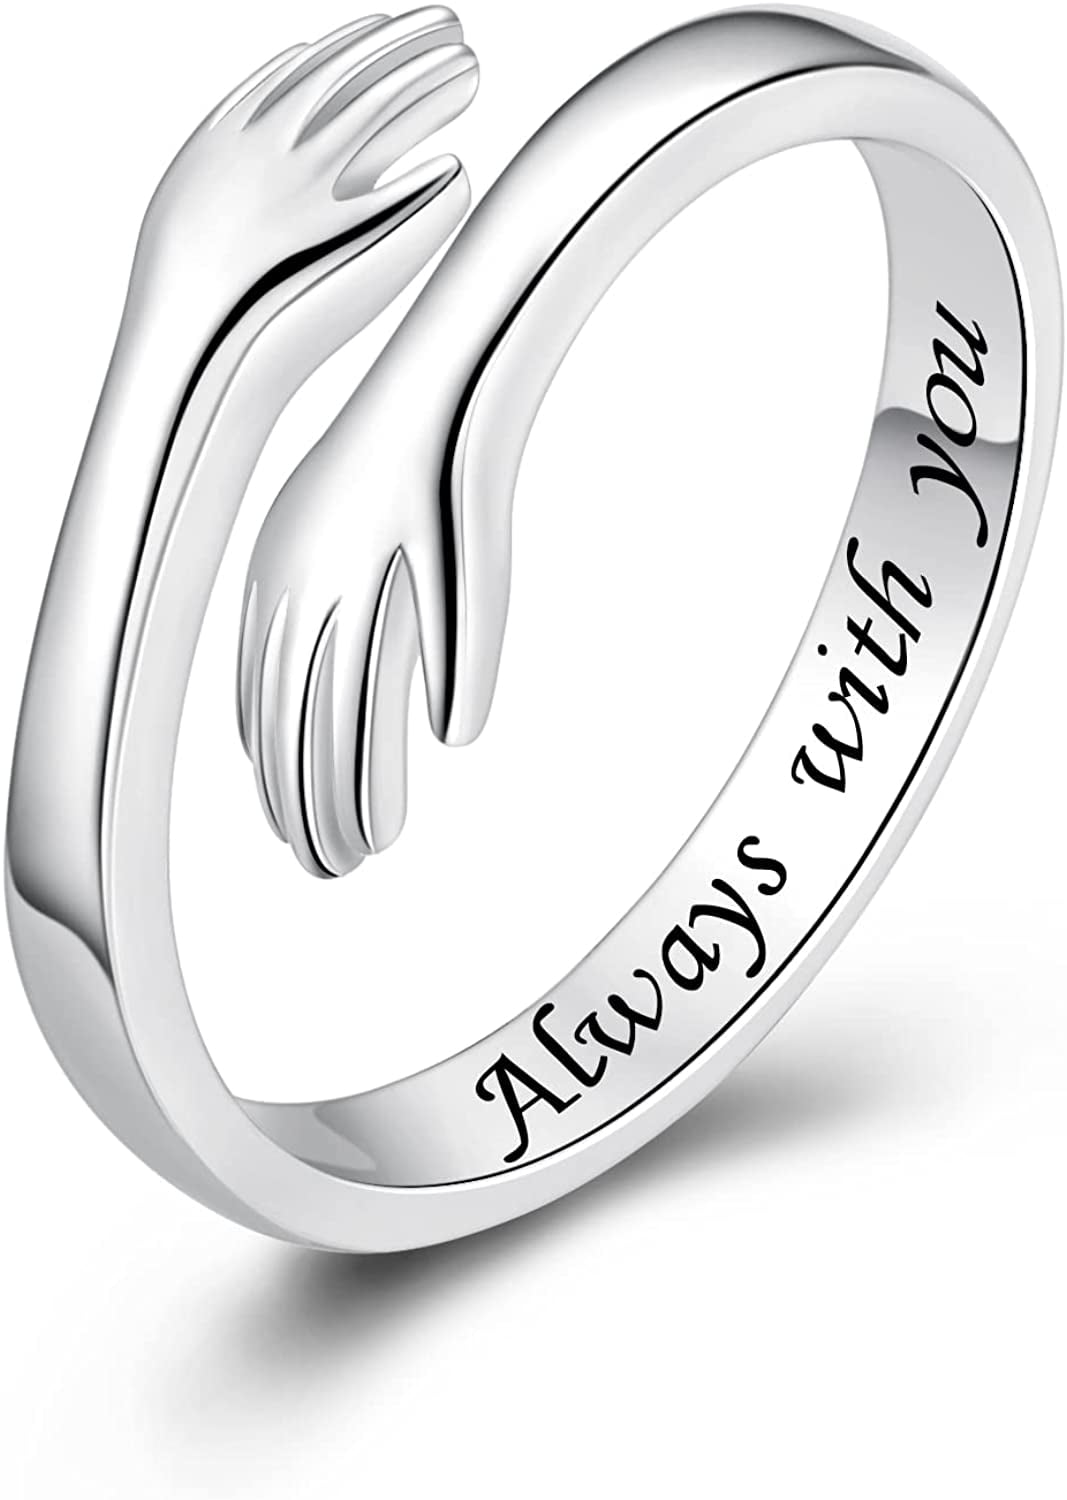 Handmade Statement Ring-925 Sterling Silver Hug Ring Engagement Vintage Finger Love Promise Ring Silver Couples Wedding Friendship Rings for Women Girl Jewelry 